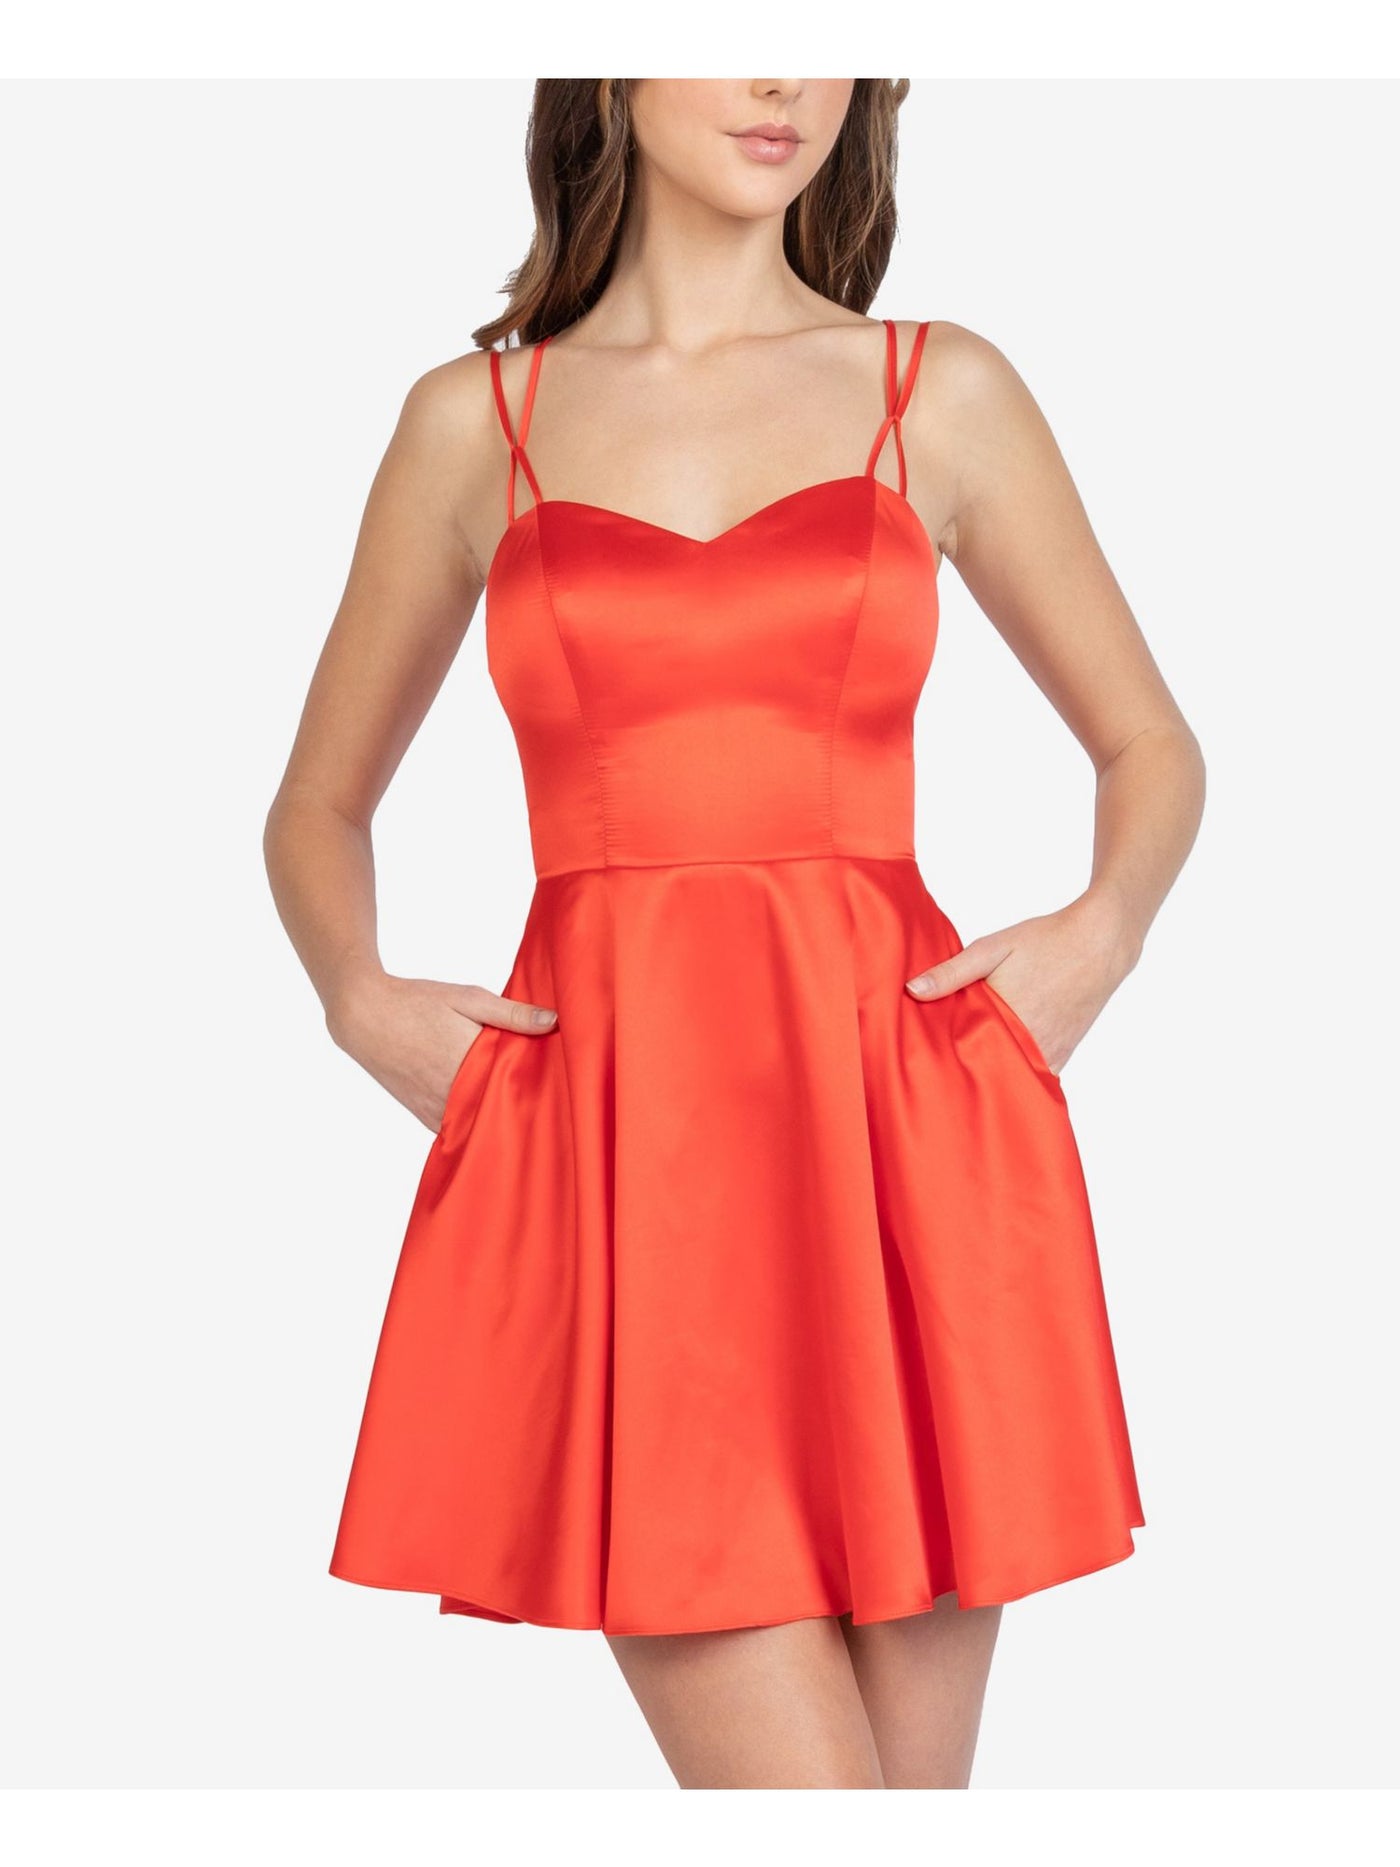 B DARLIN Womens Red Spaghetti Strap Sweetheart Neckline Short Cocktail Fit + Flare Dress Juniors 9\10